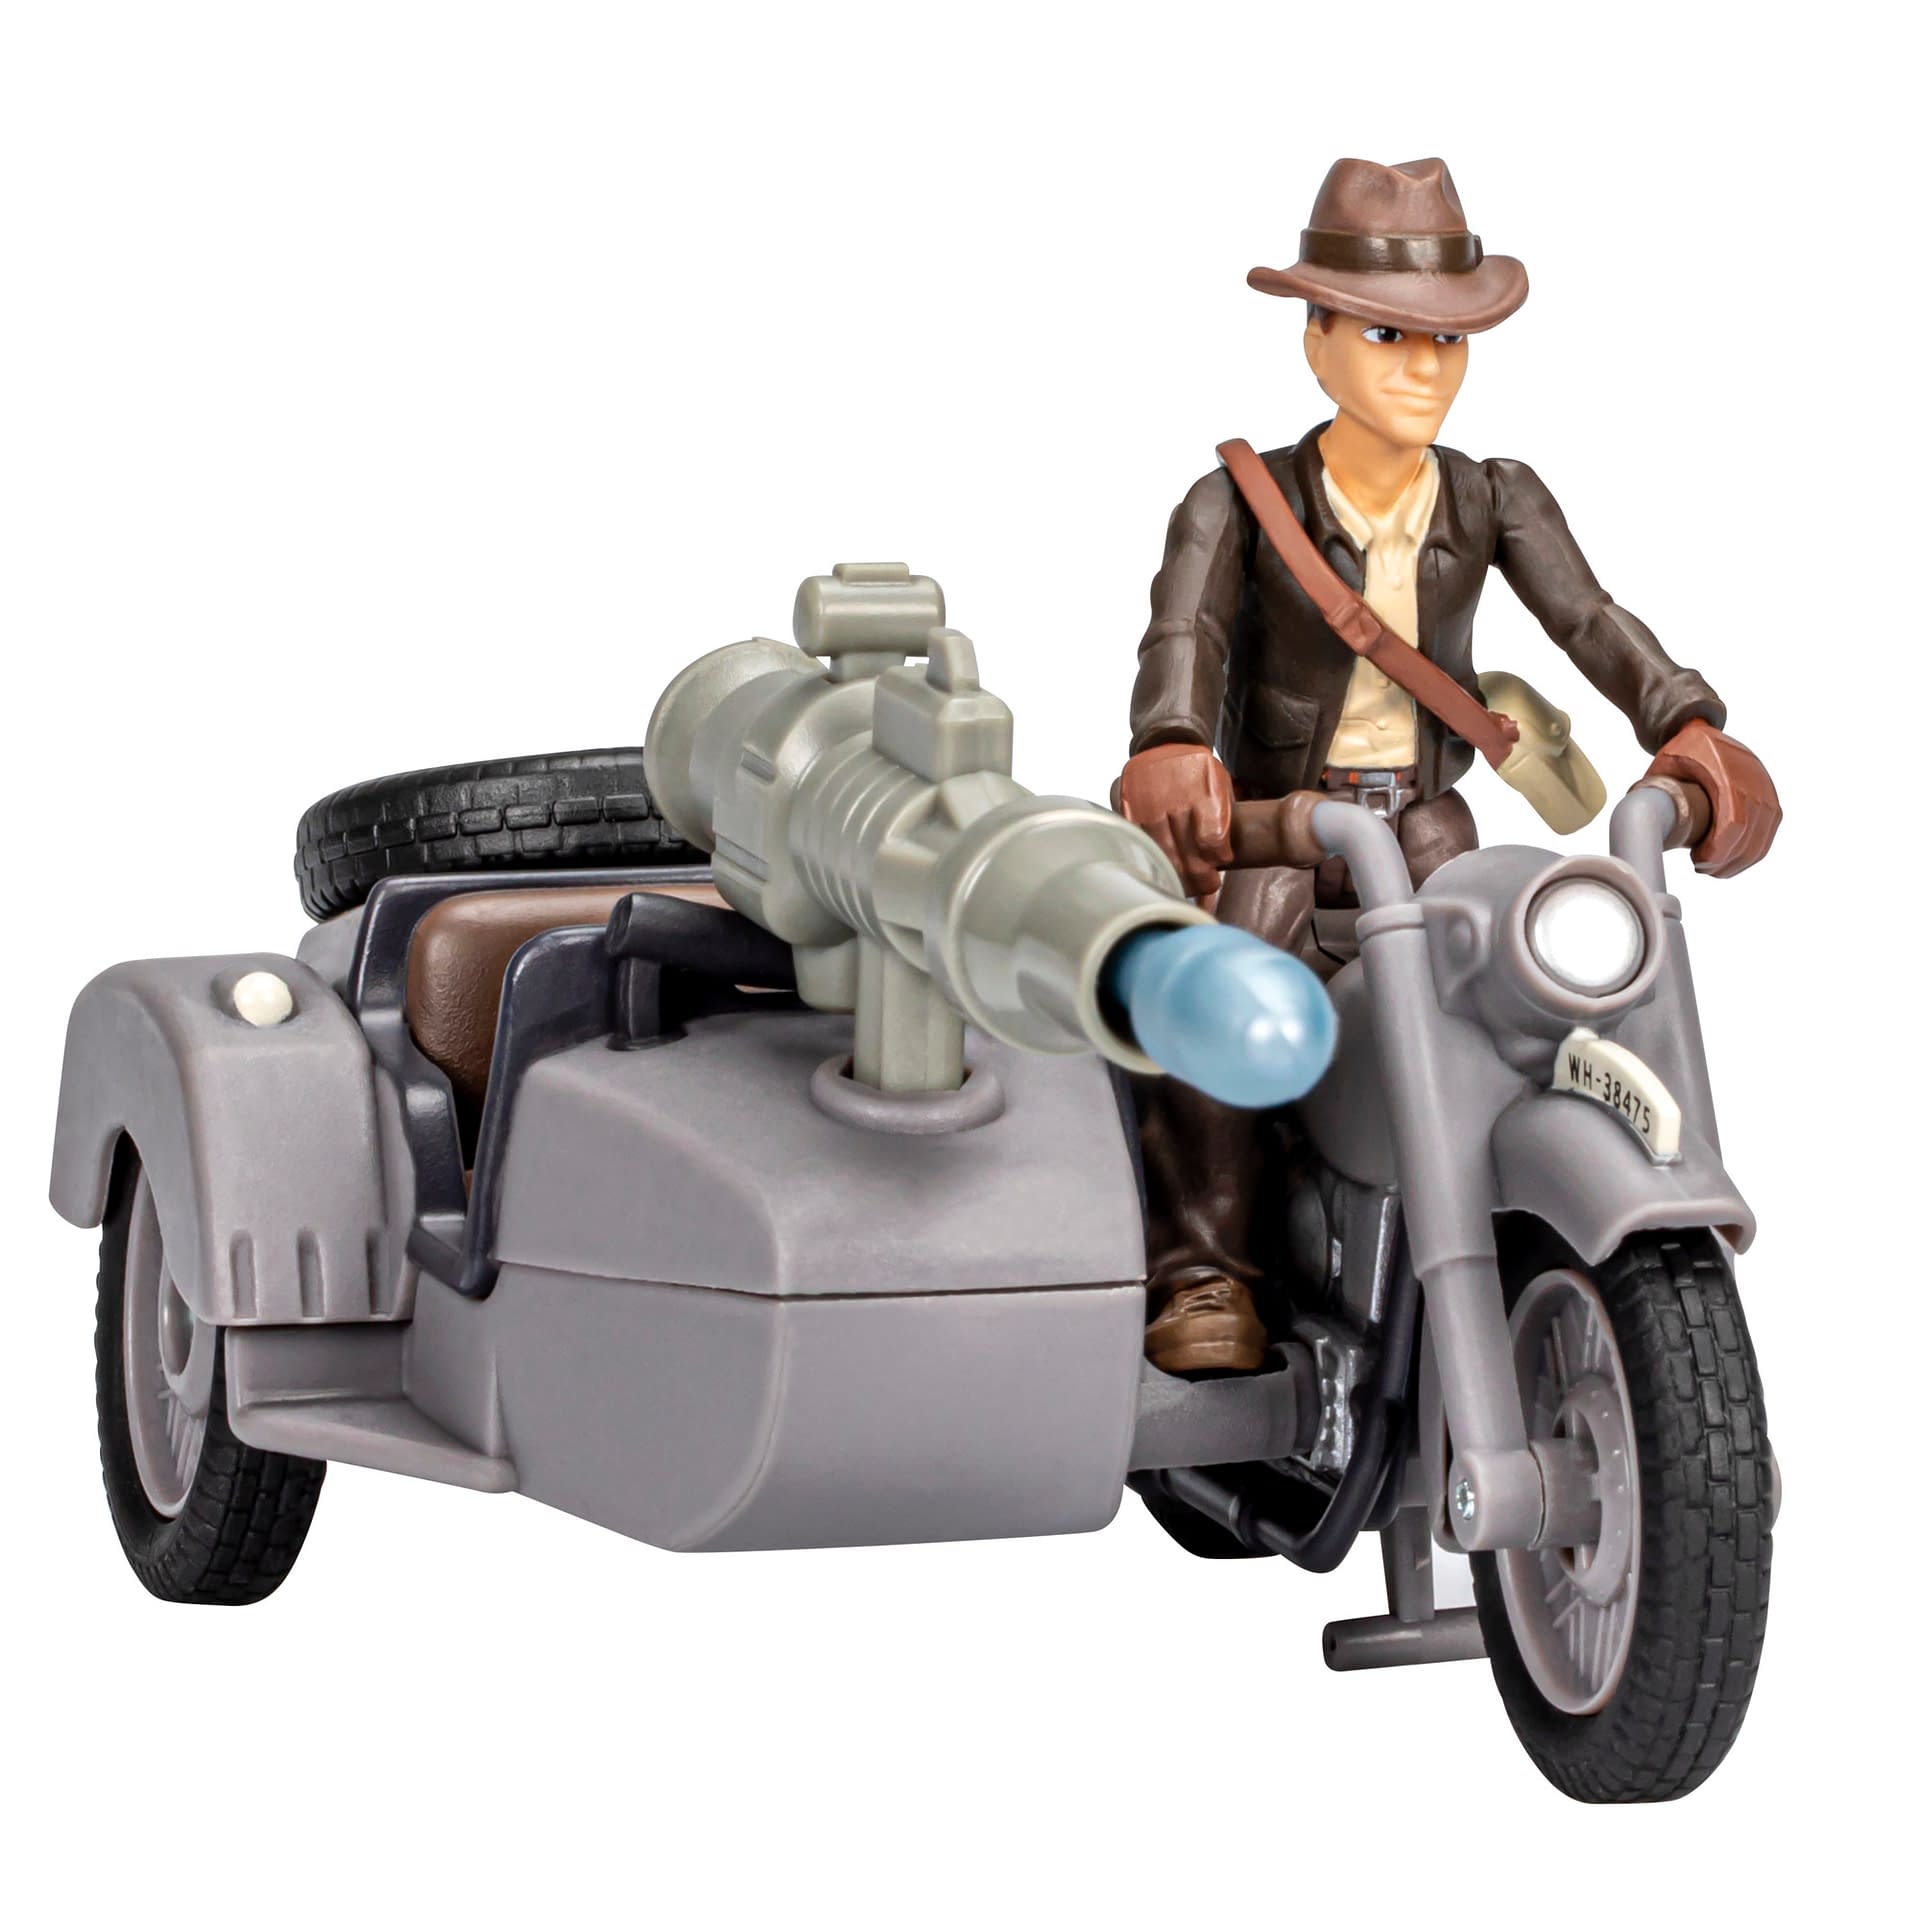 Hasbro Announces Kid-Friendly Indiana Jones Worlds of Adventure Sets